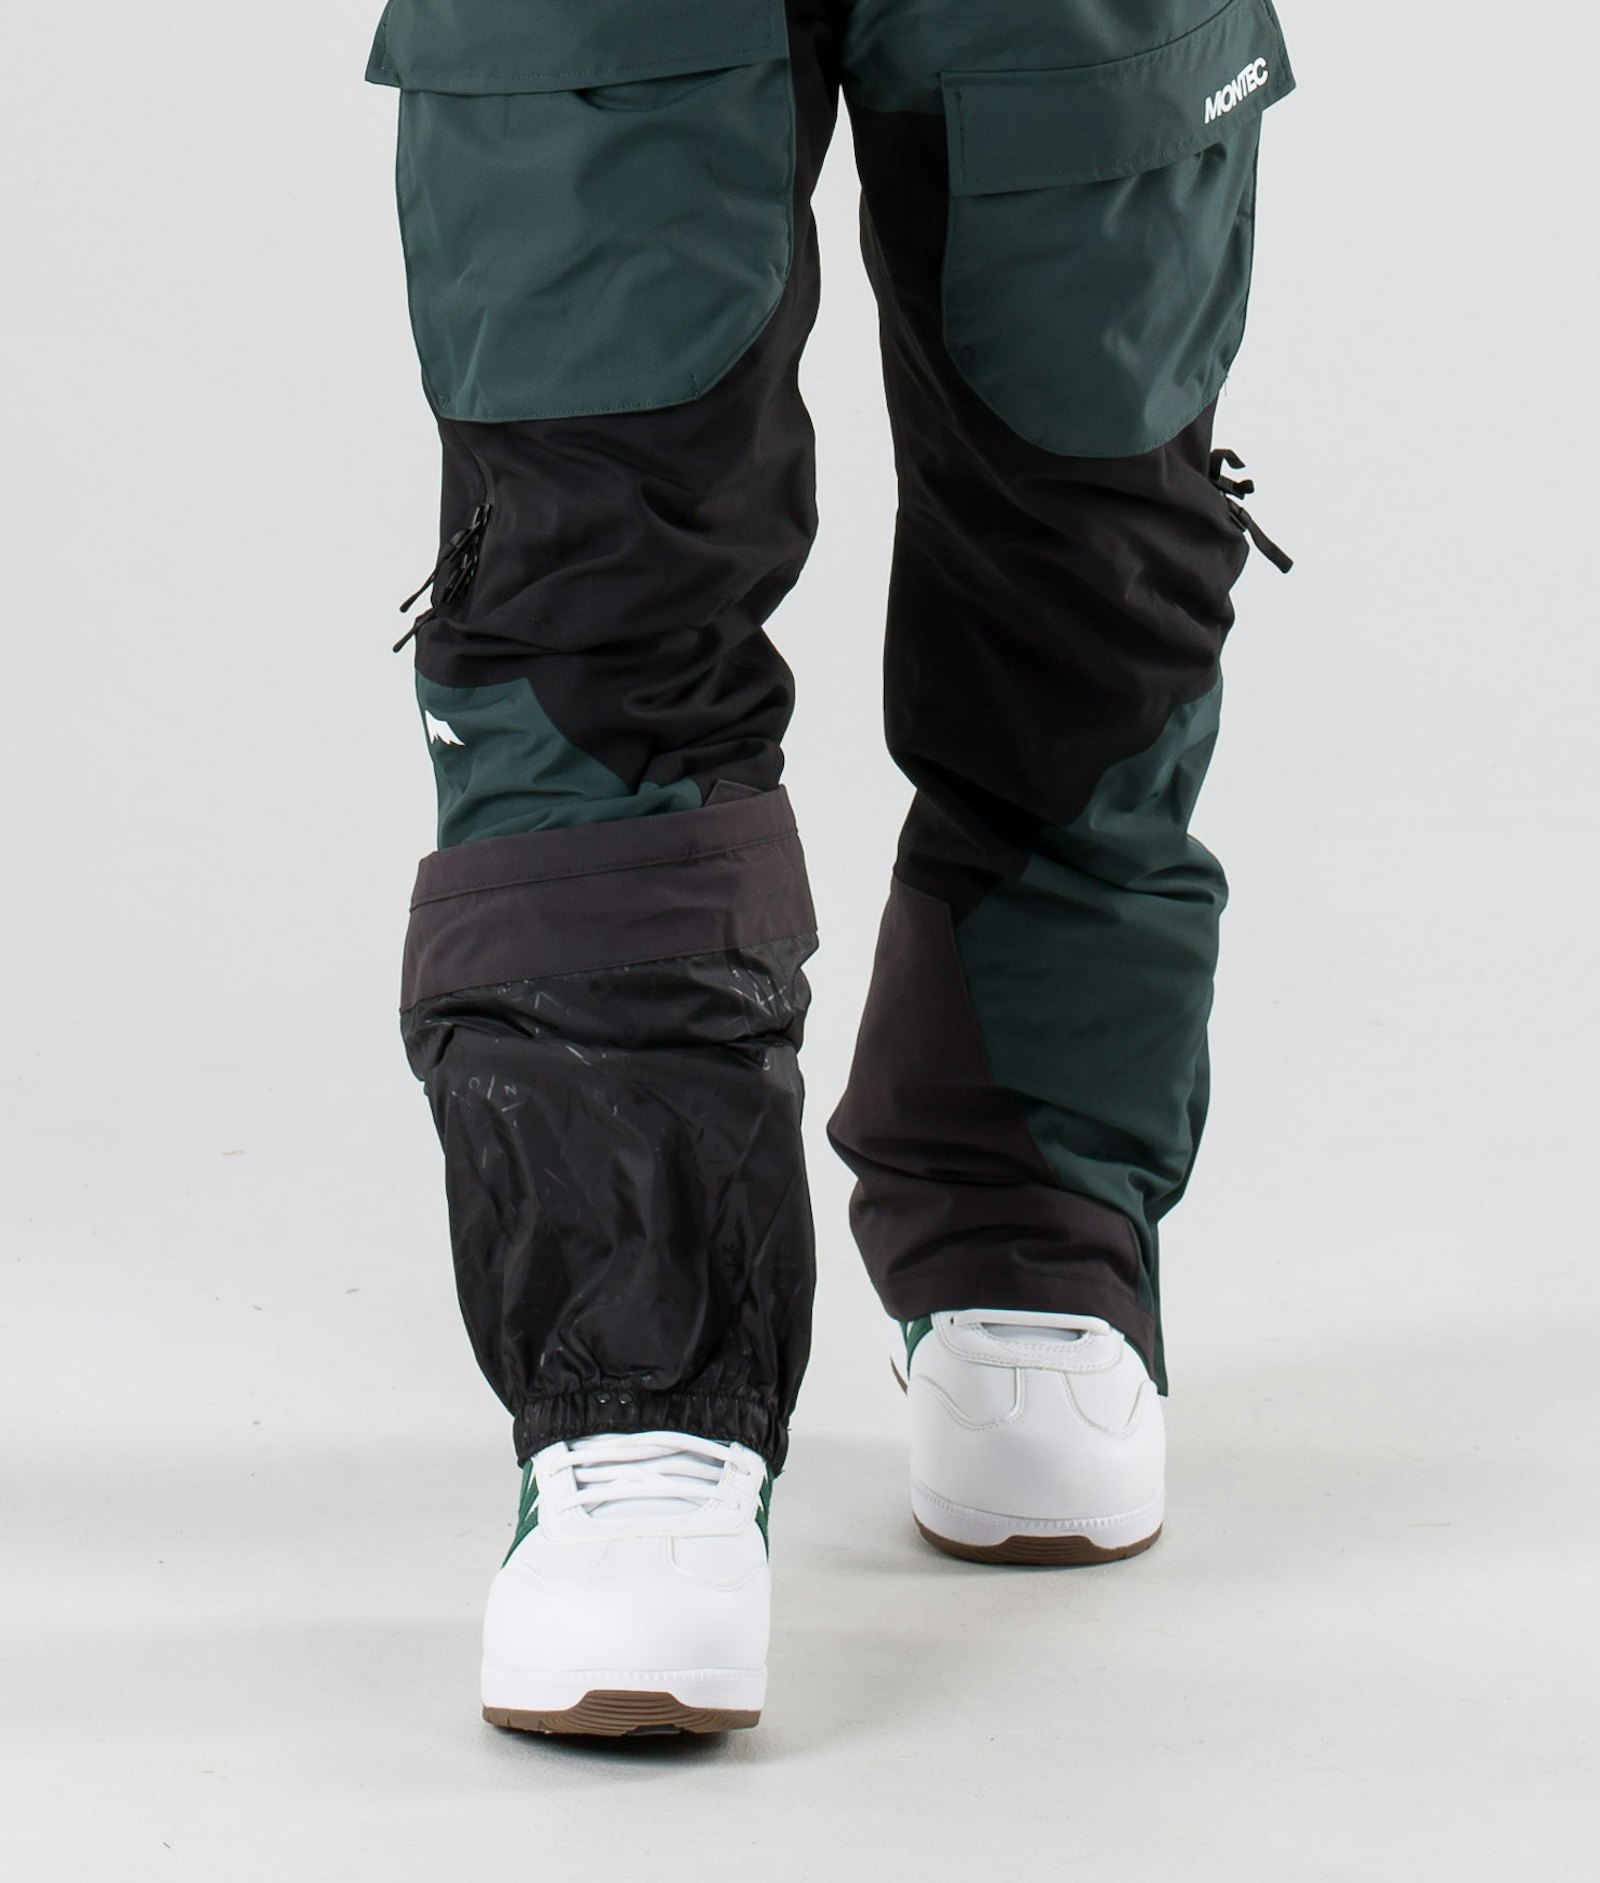 Montec Fawk 2019 Pantalon de Snowboard Homme Dark Atlantic/Black